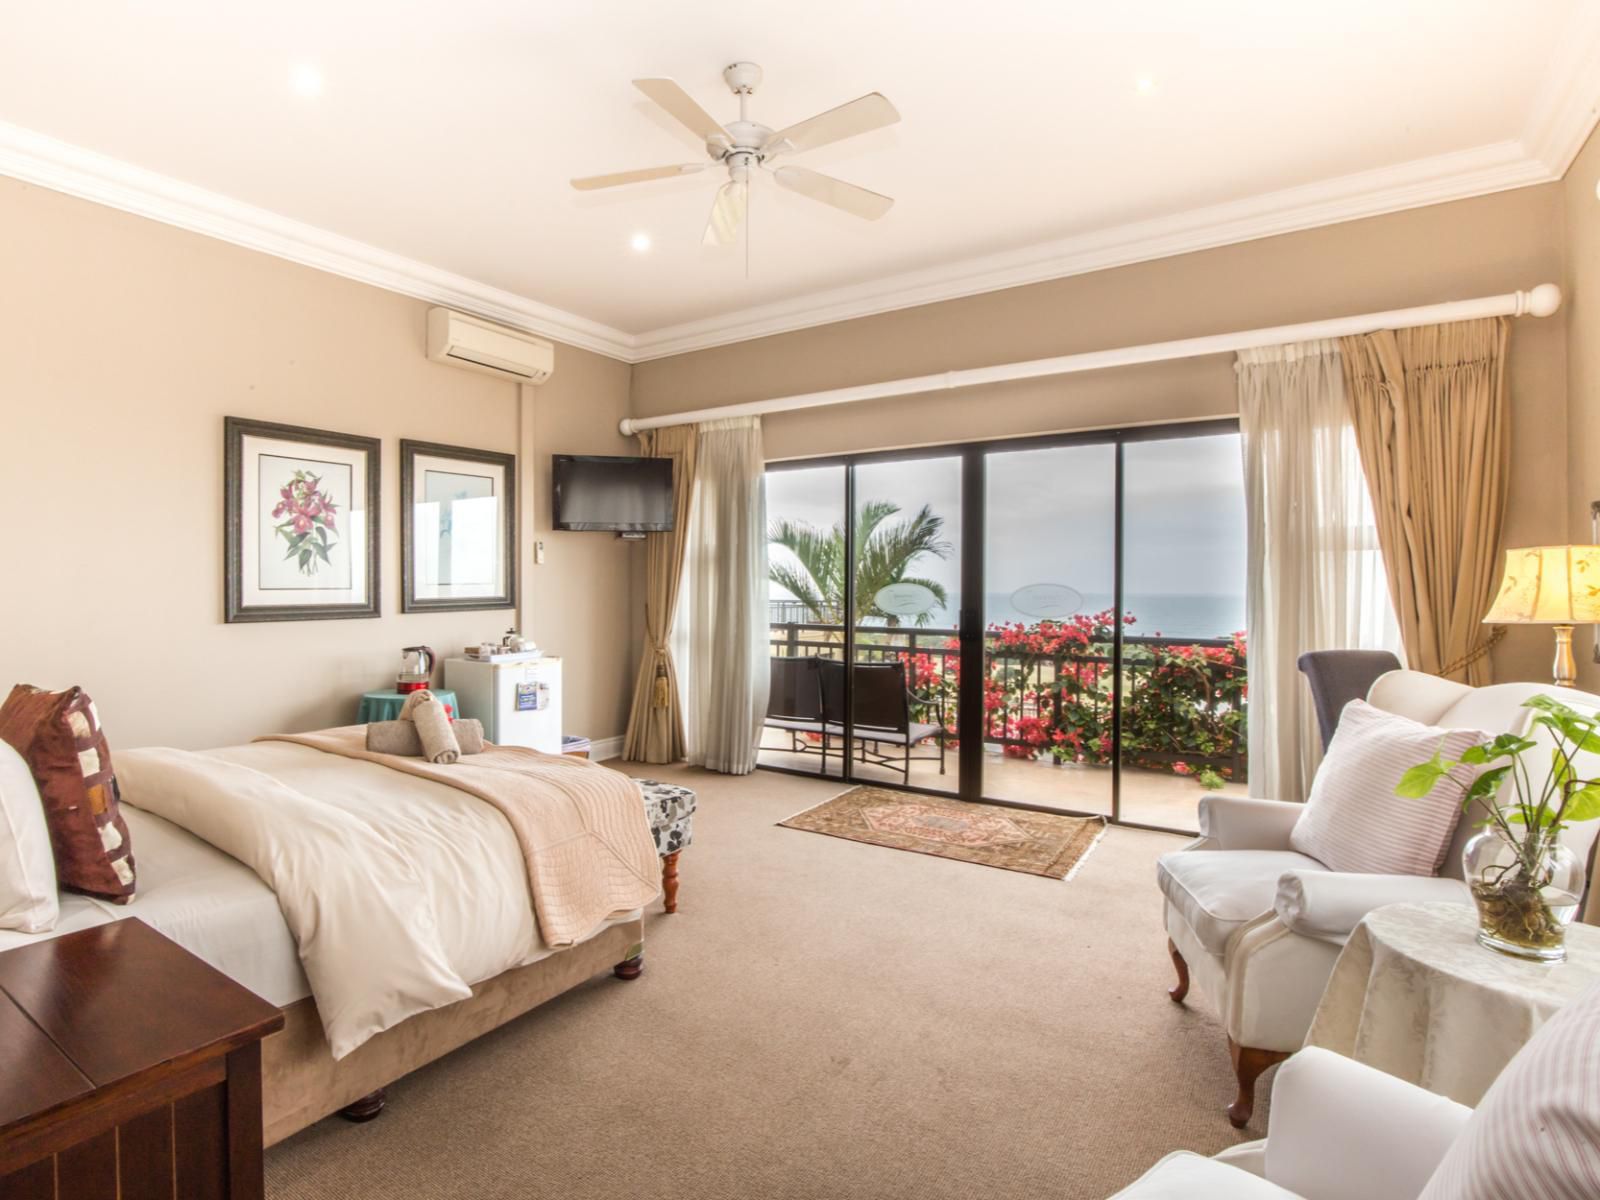 Fairway Guest House Durban North Durban Kwazulu Natal South Africa Bedroom